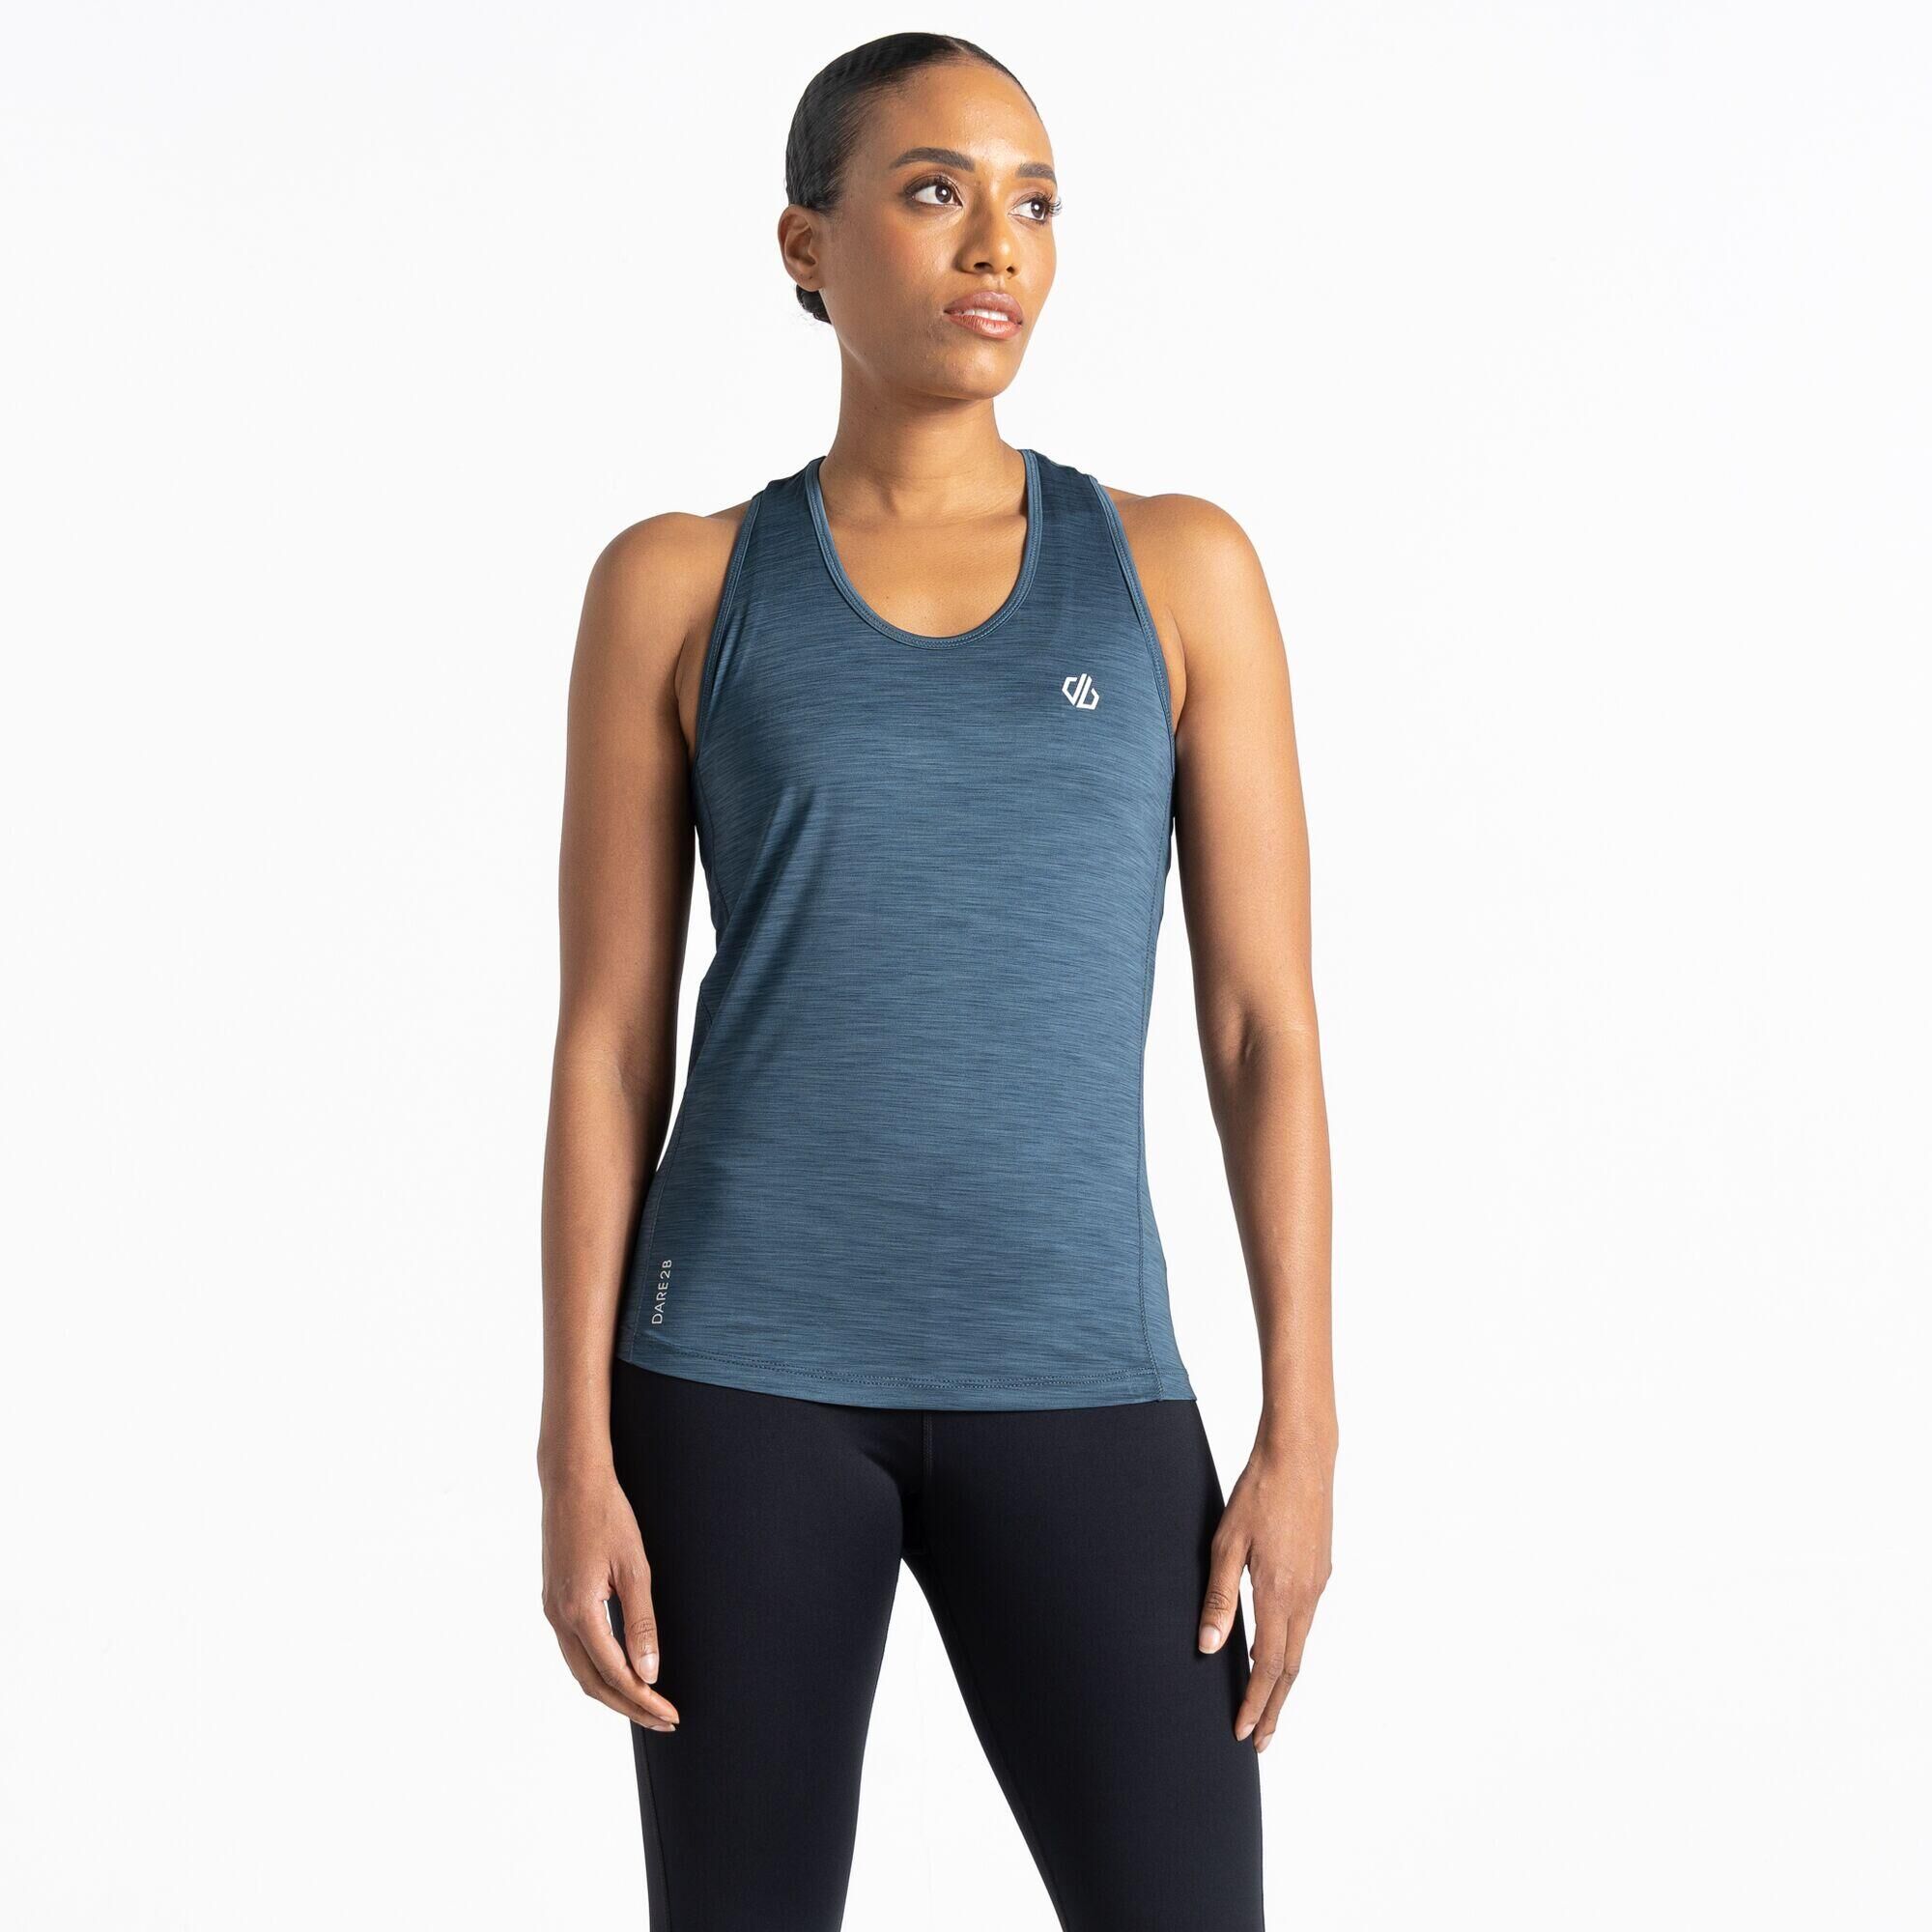 DARE 2B Modernize II Women's Fitness Sleeveless Vest - Blue Orion Grey